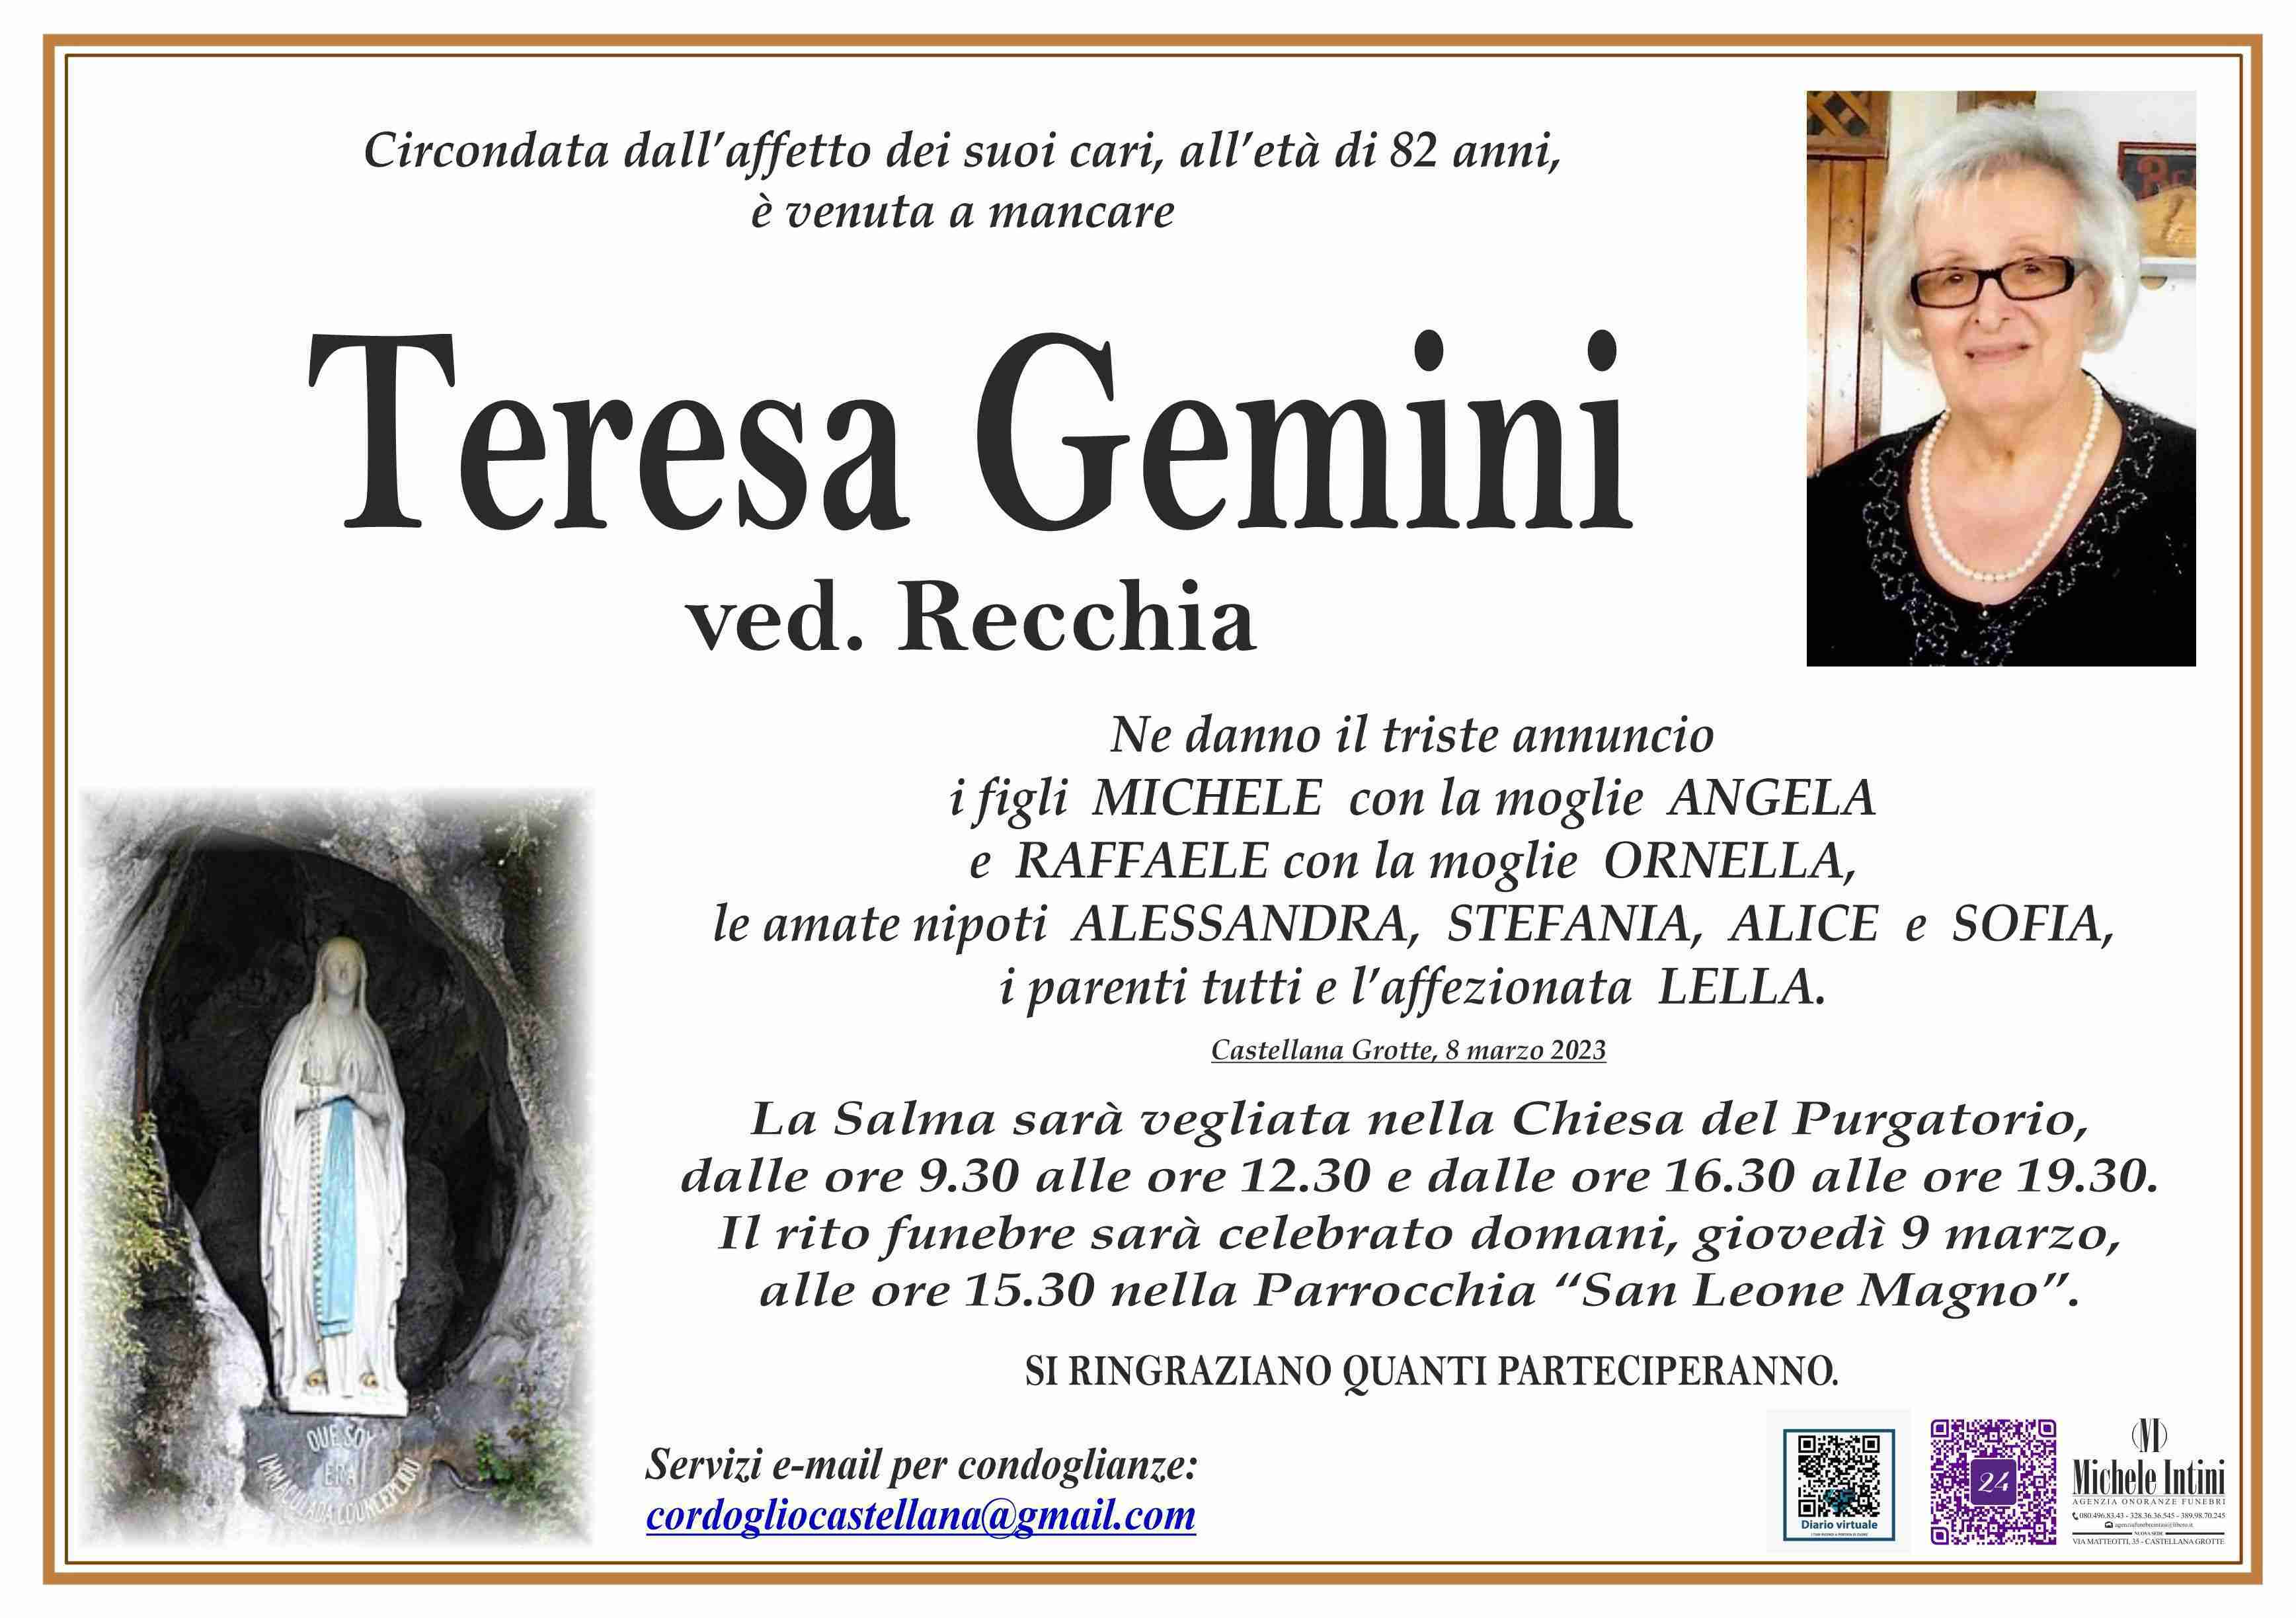 Teresa Gemini